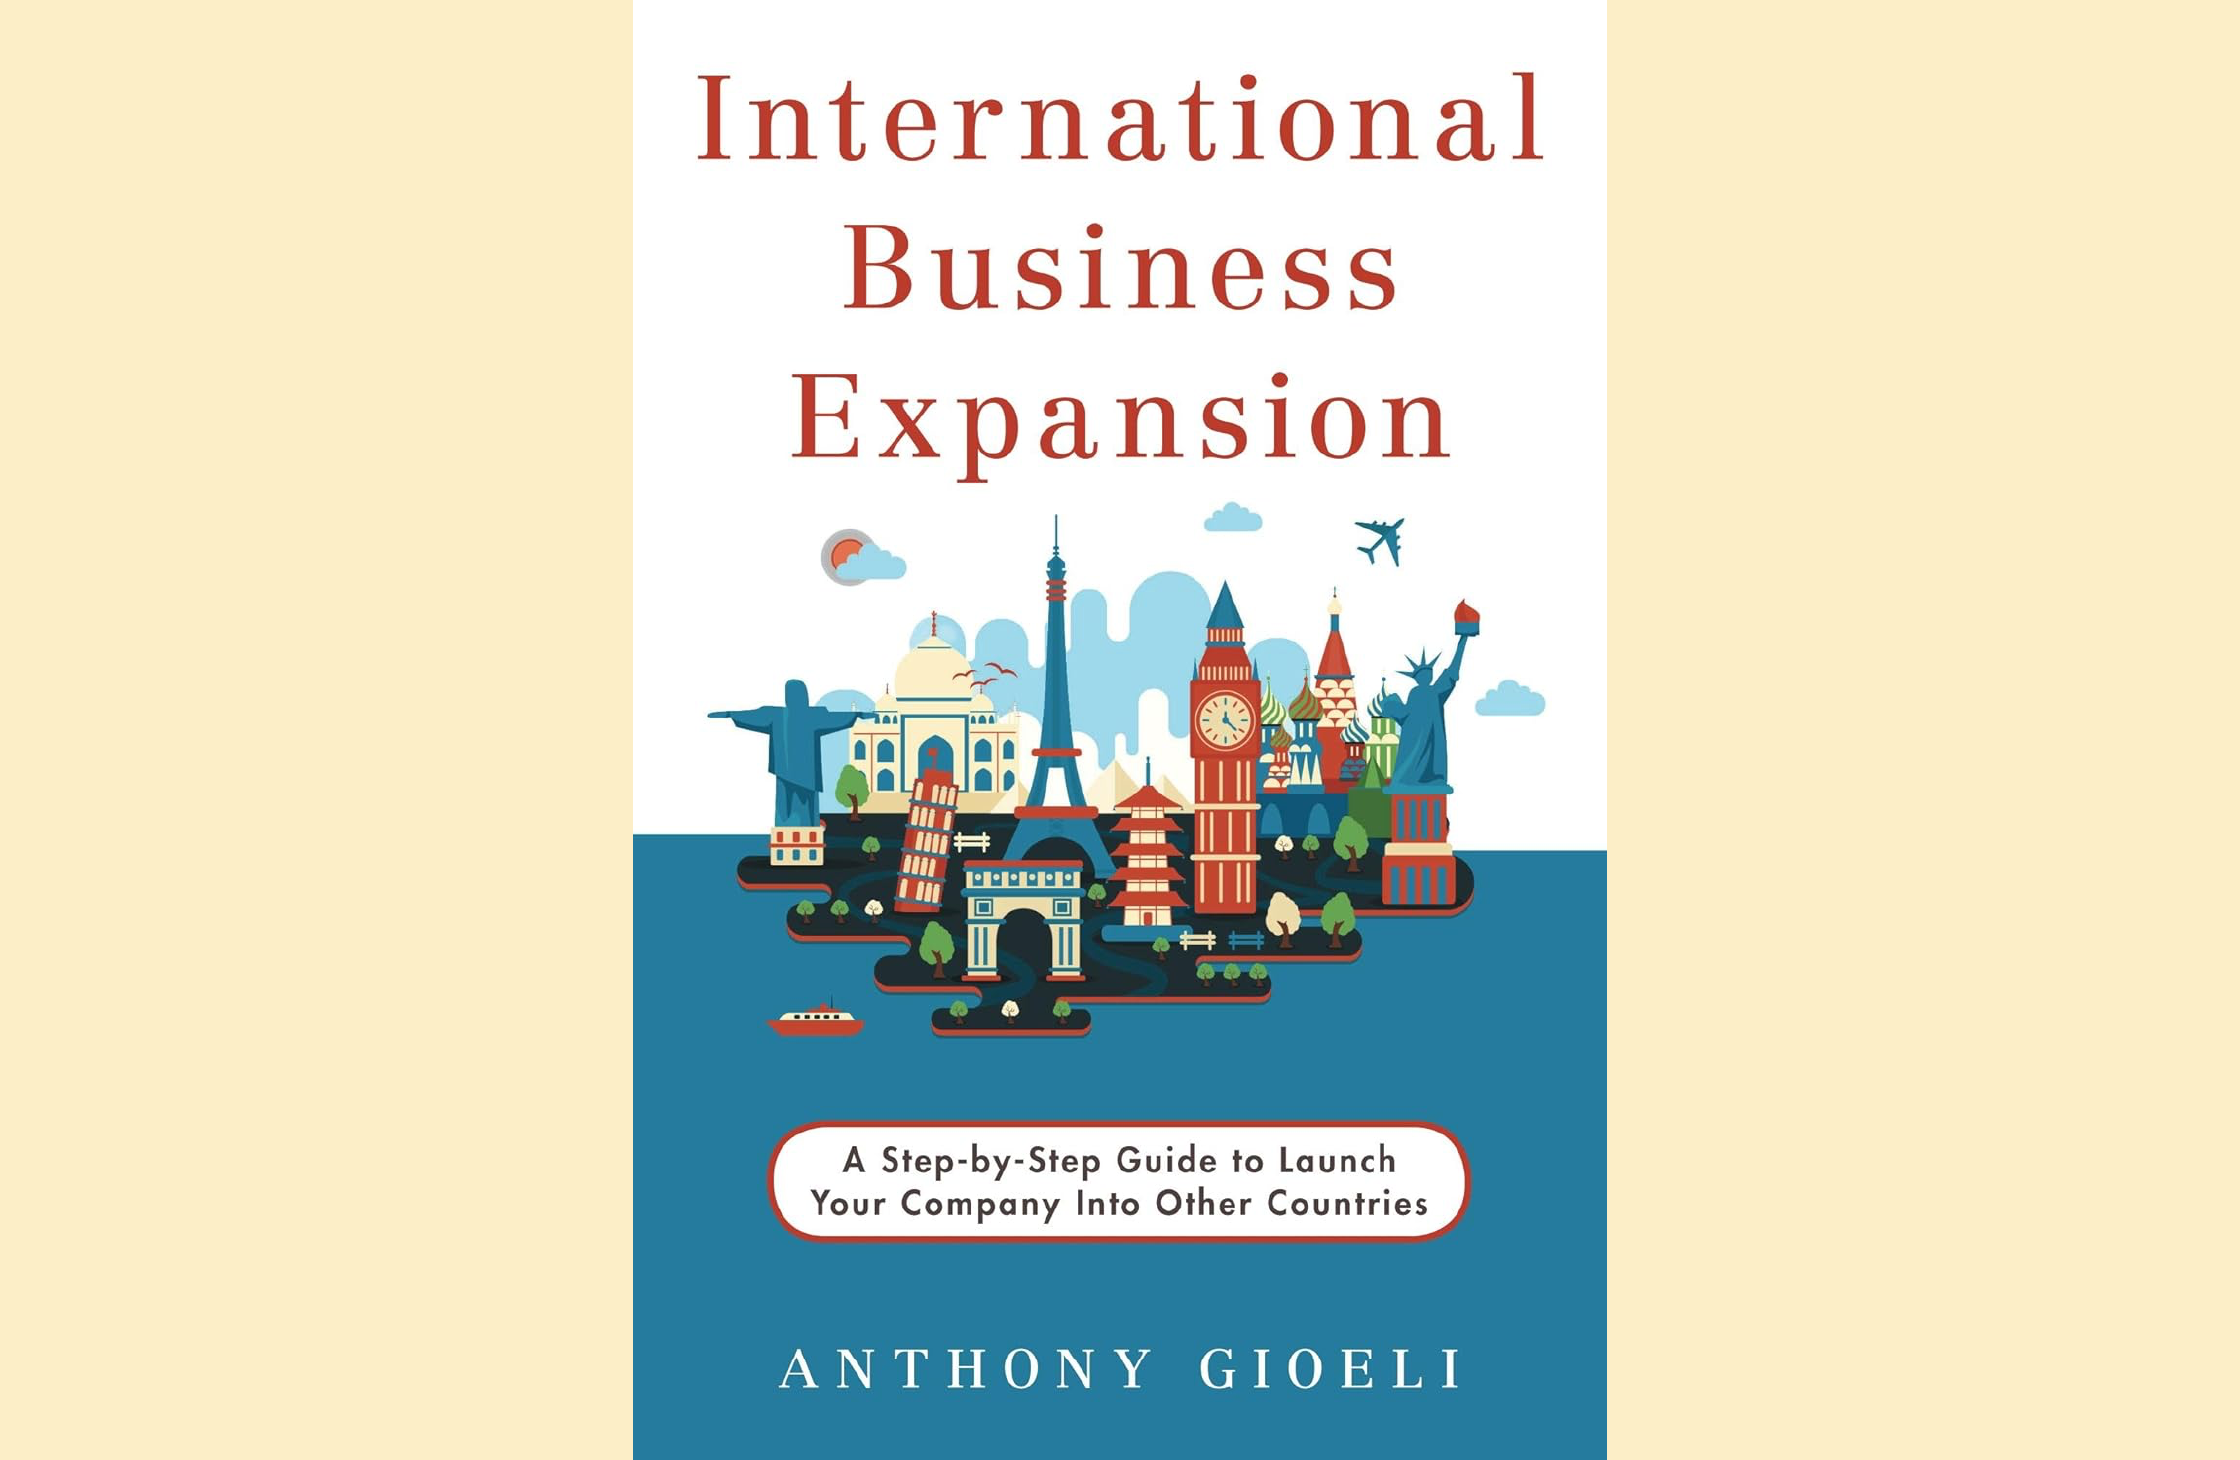 Summary: International Business Expansion by Anthony Gioeli